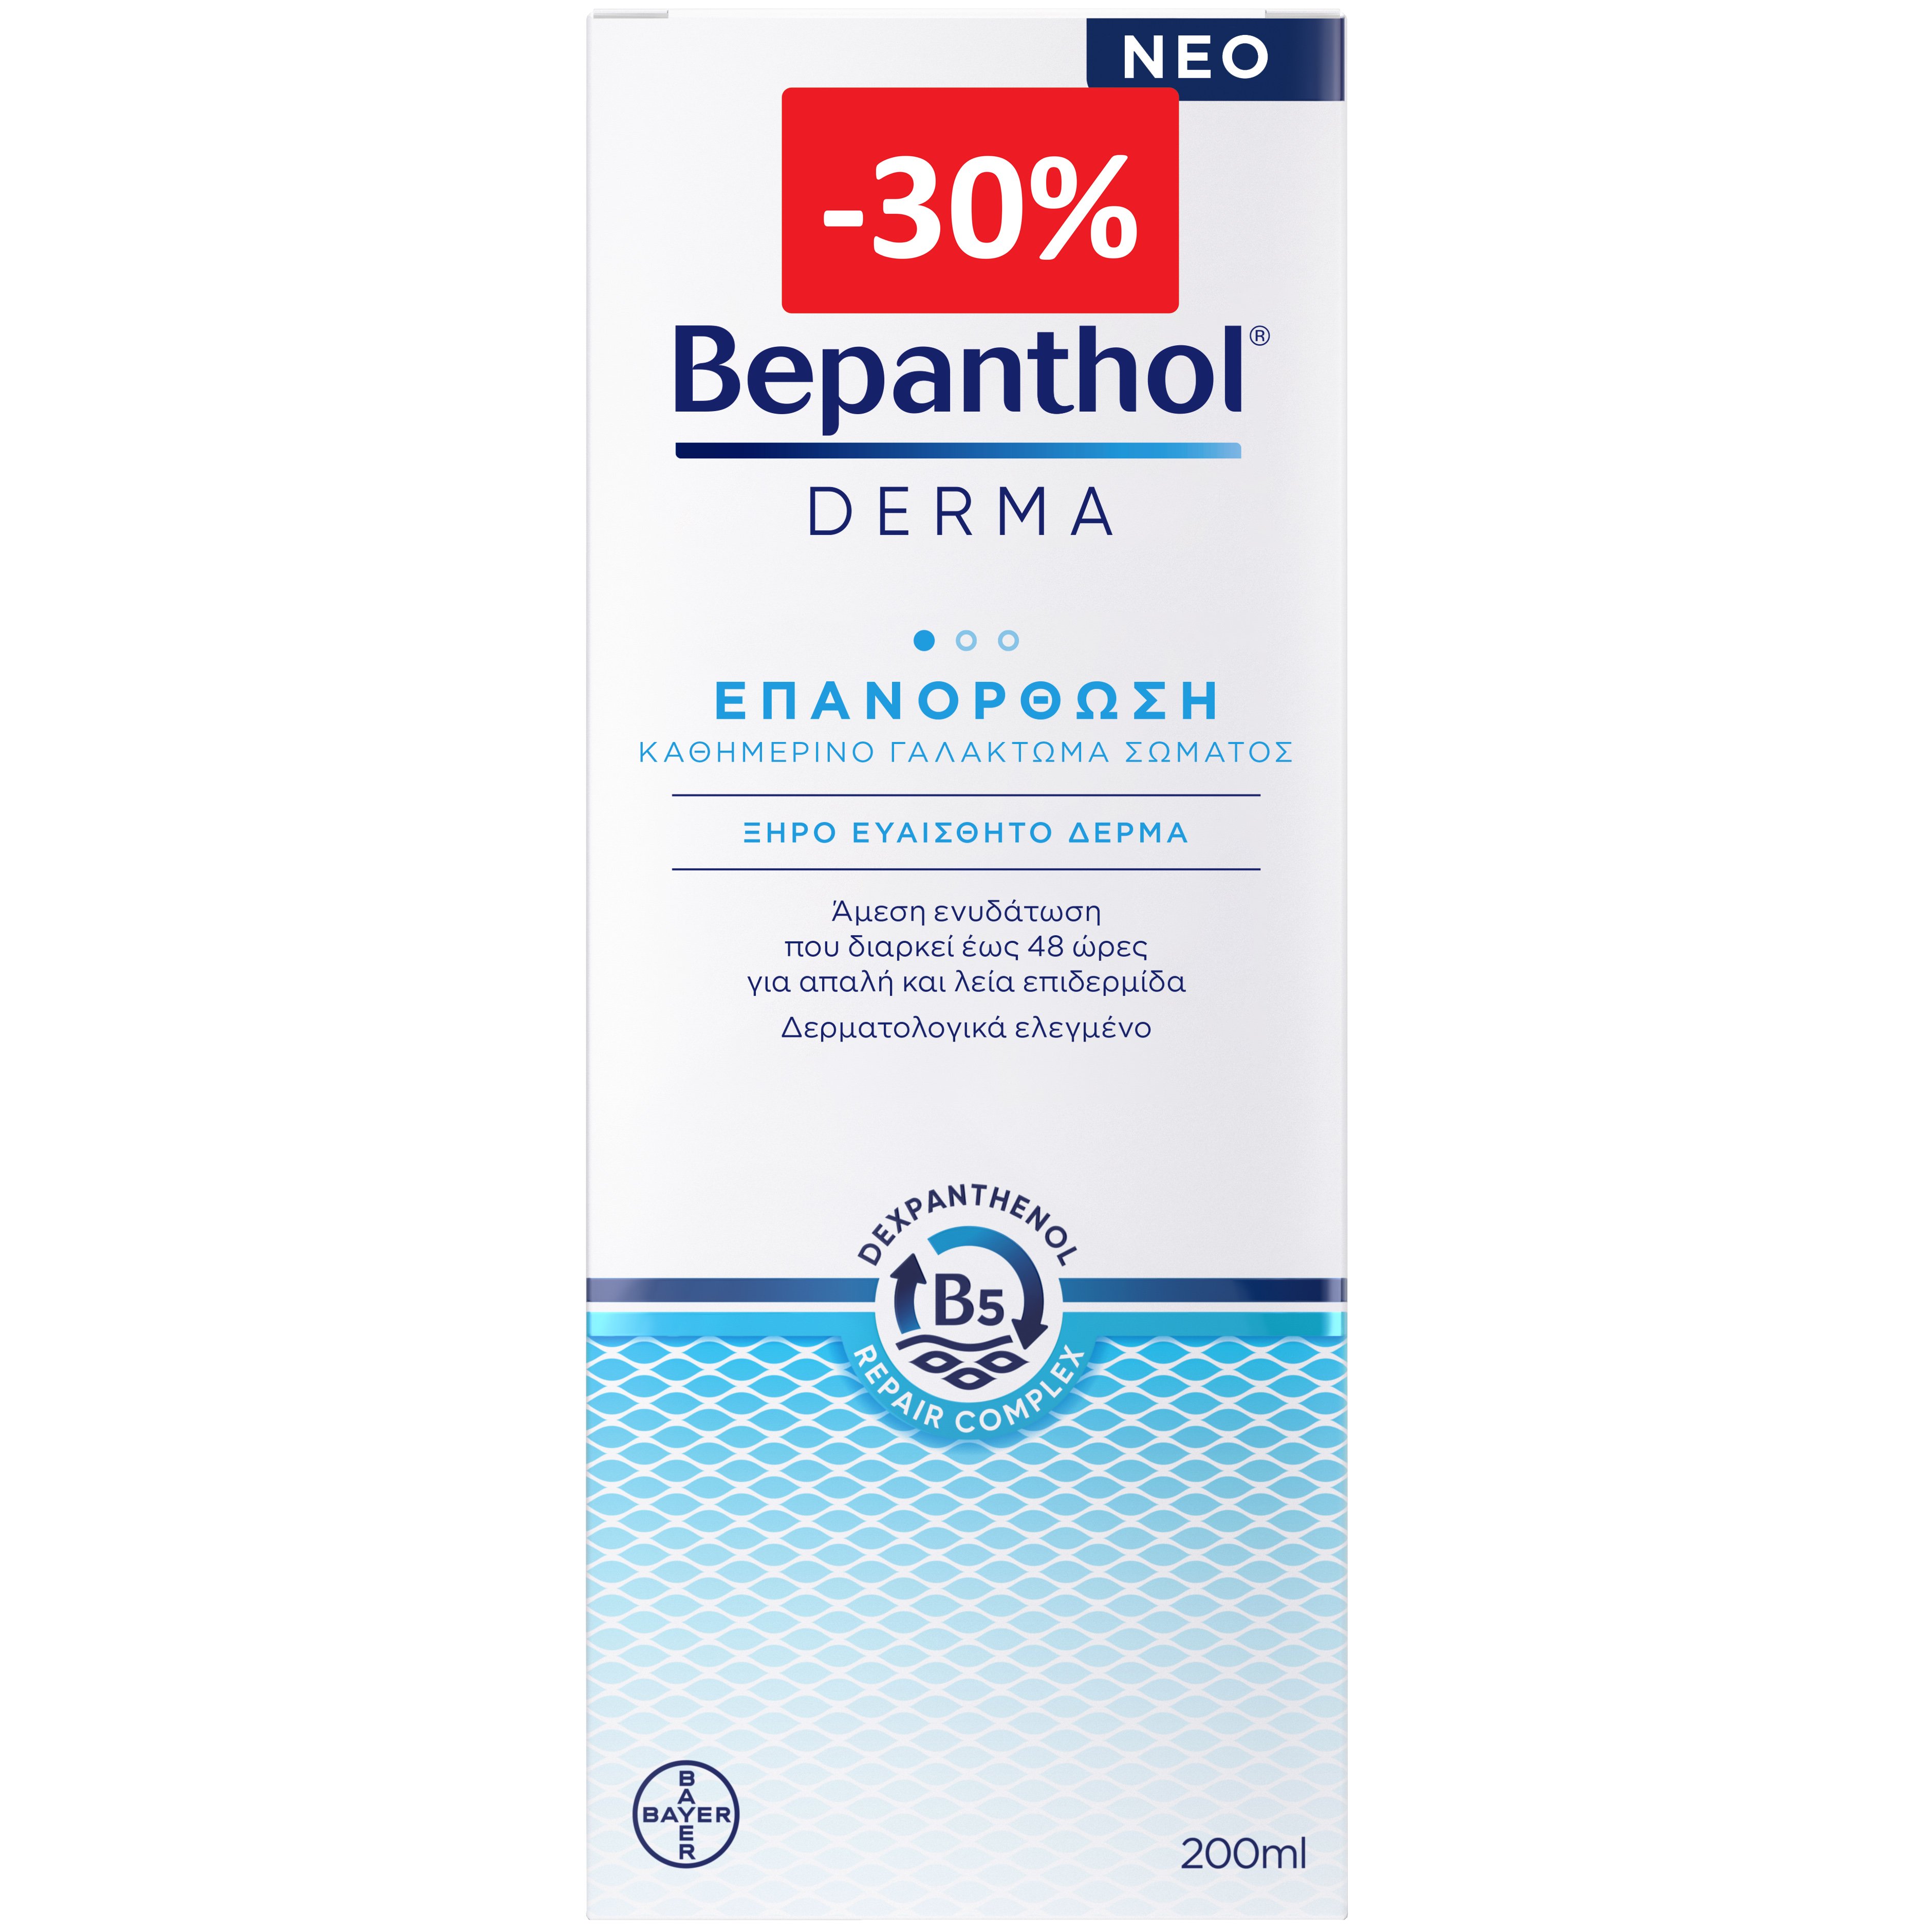 Bepanthol Derma Restoring Daily Body Lotion for Dry Sensitive Skin Καθημερινό Γαλάκτωμα Σώματος Επανόρθωσης του Ξηρού Ευαίσθητου Δέρματος 200ml Promo -30%